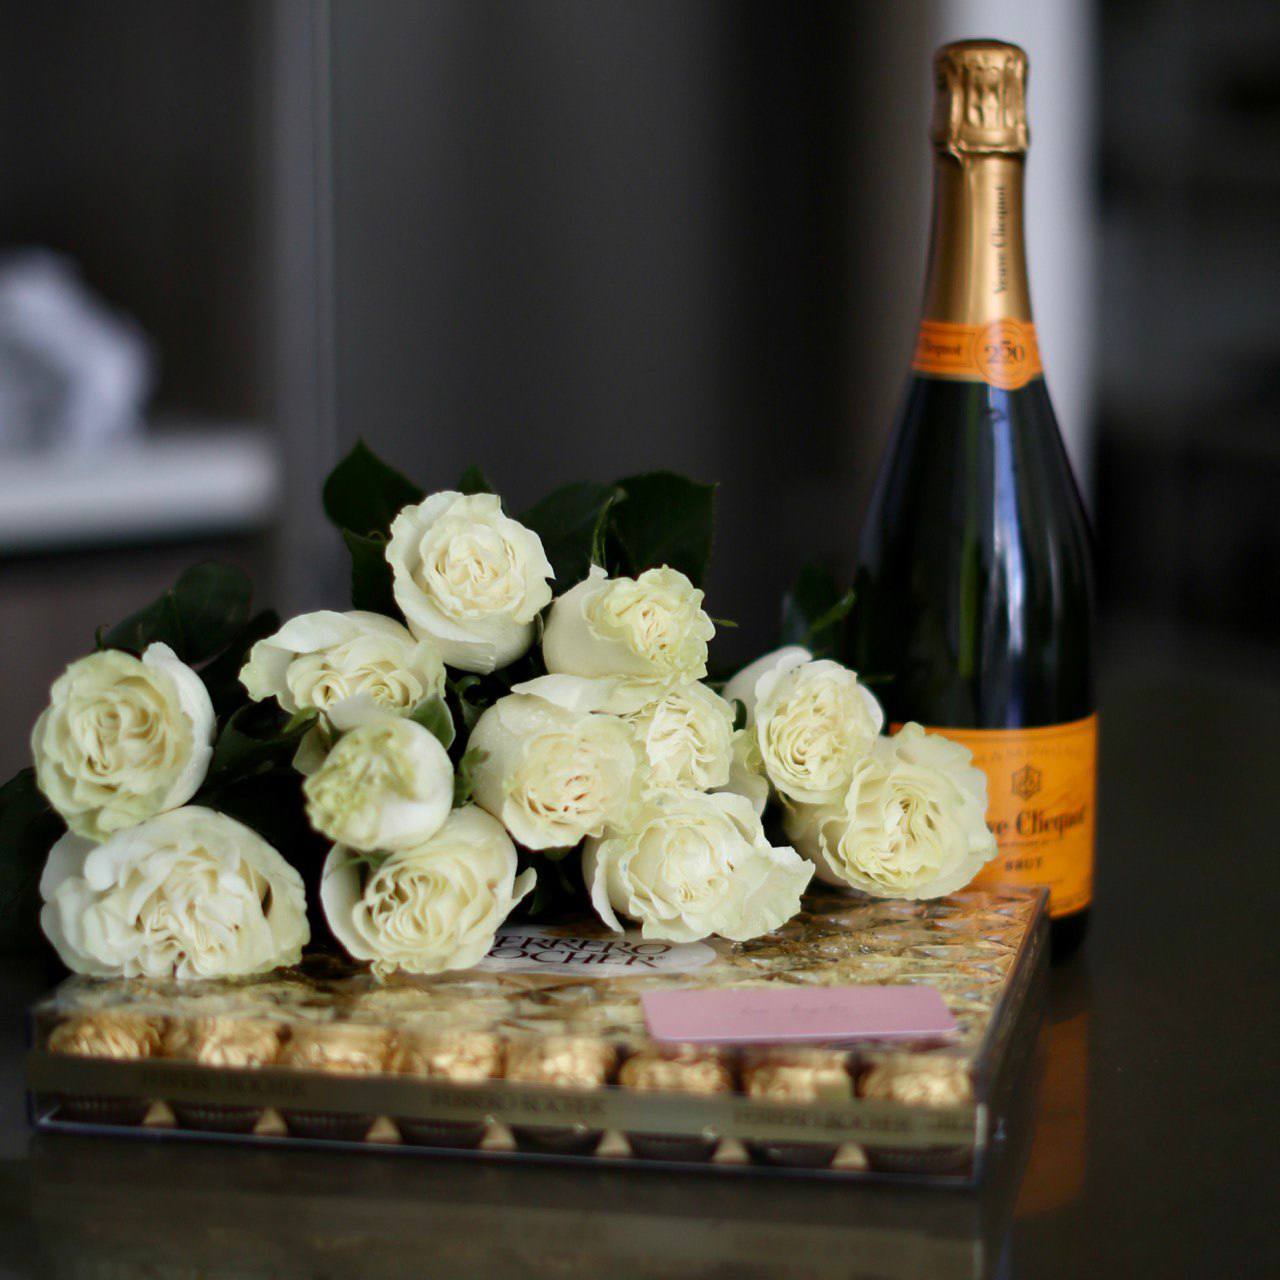 Gift Box - Champagne & Chocolates